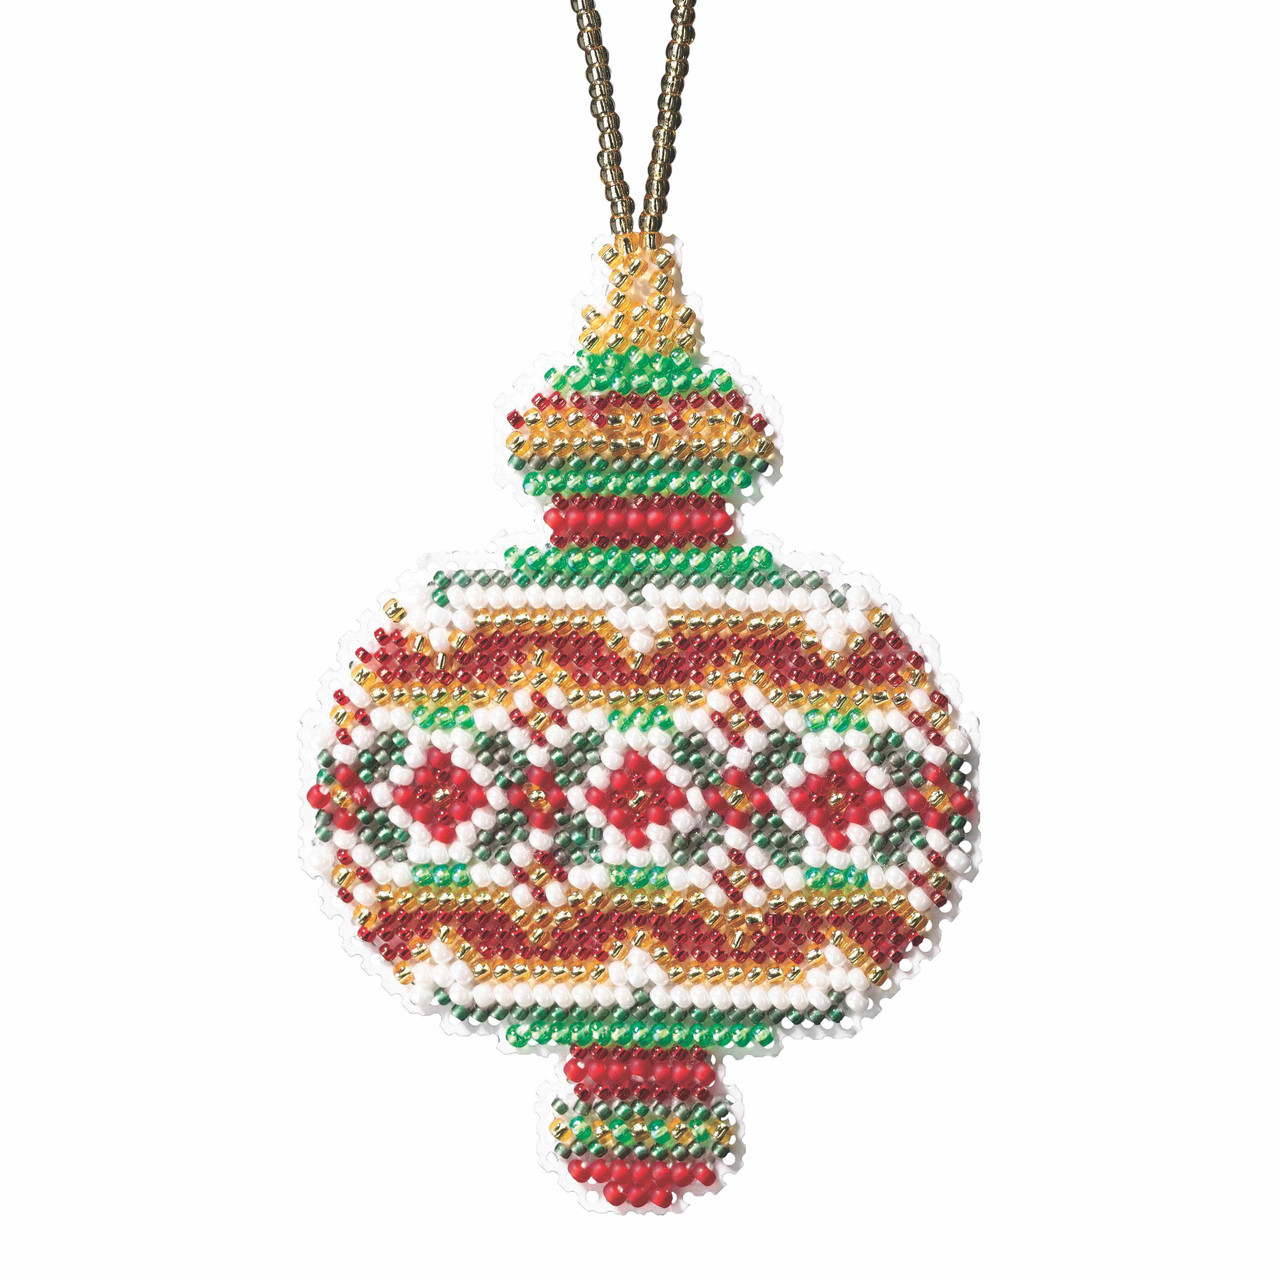 Ruby Diamond Beaded Cross Stitch Ornament Kit Mill Hill 2019 Beaded Holiday MH211913